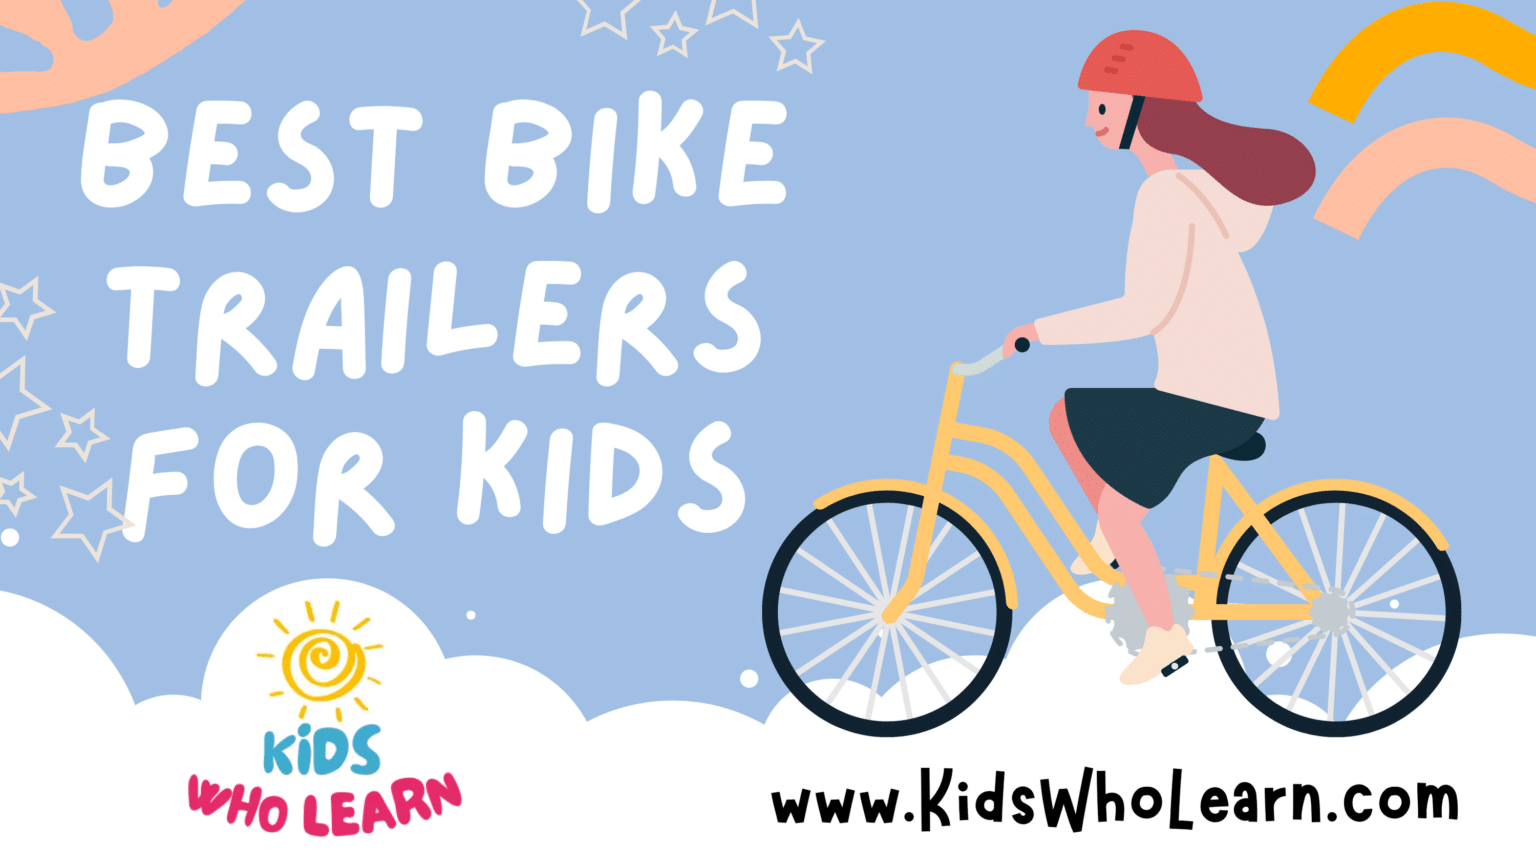 Best Bike Trailers For Kids